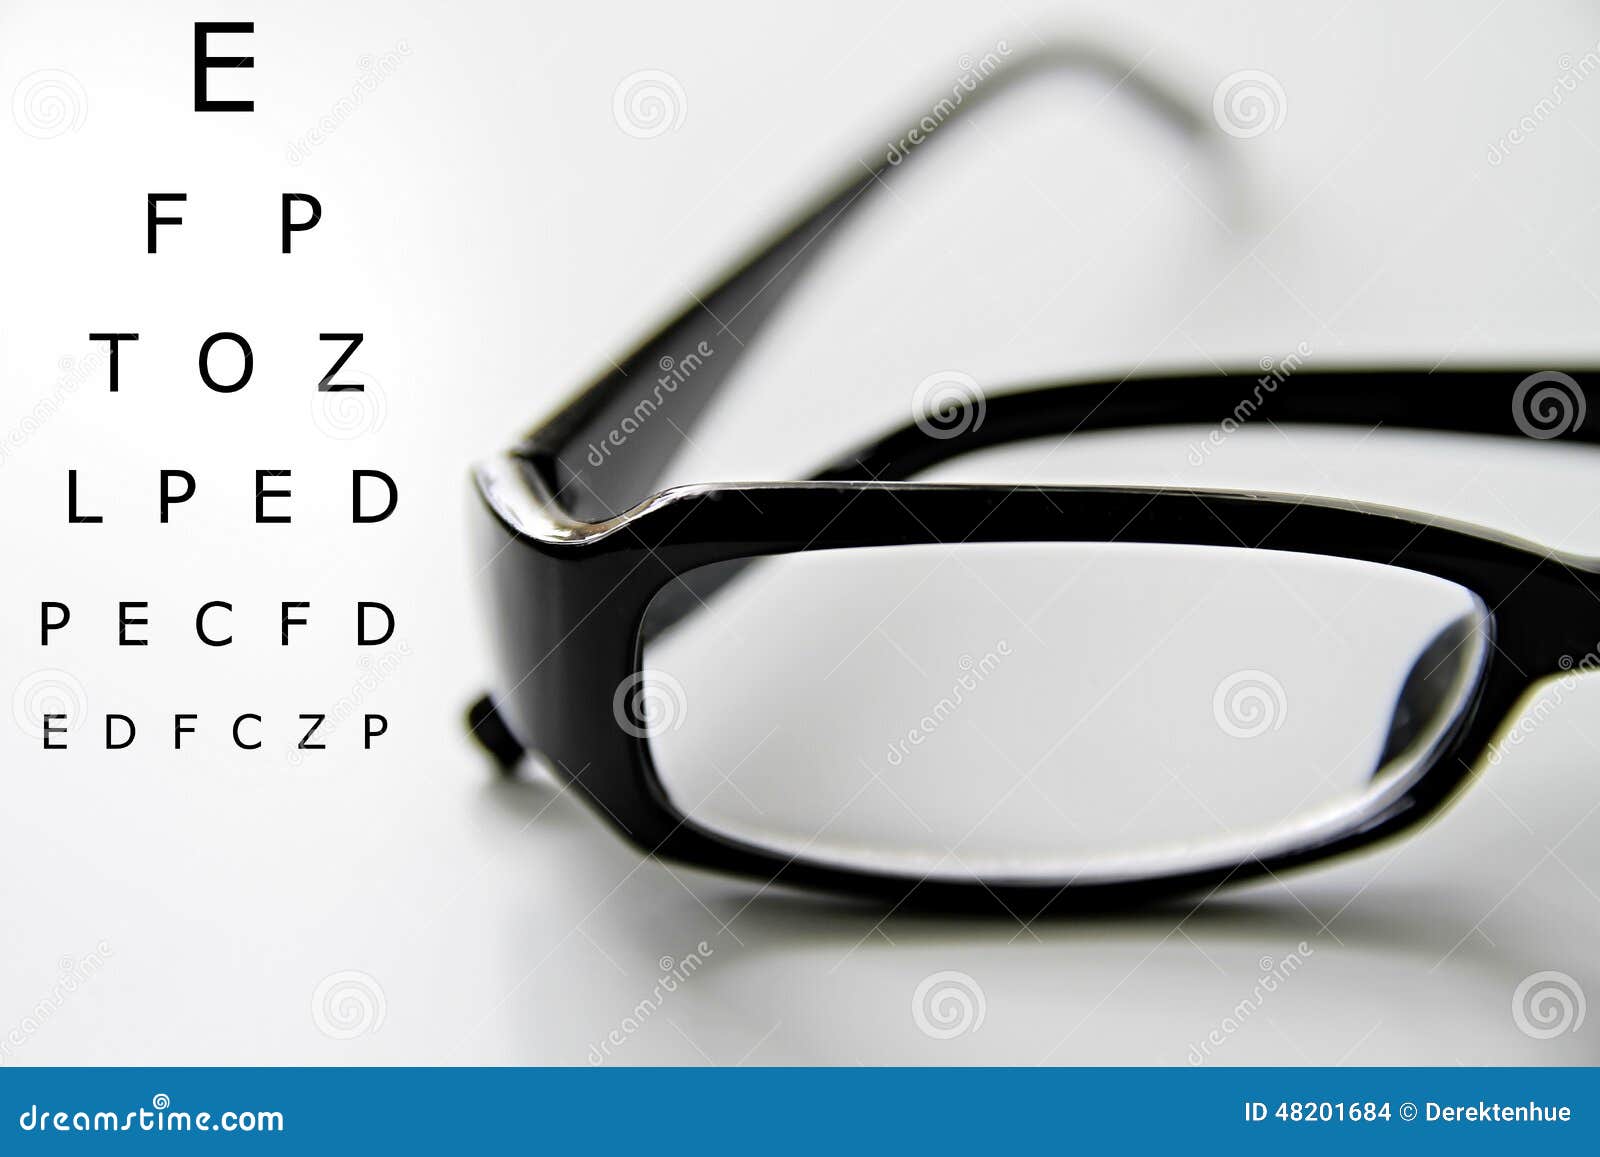 663 Eye Glasses Silhouette Stock Photos - Free & Royalty-Free